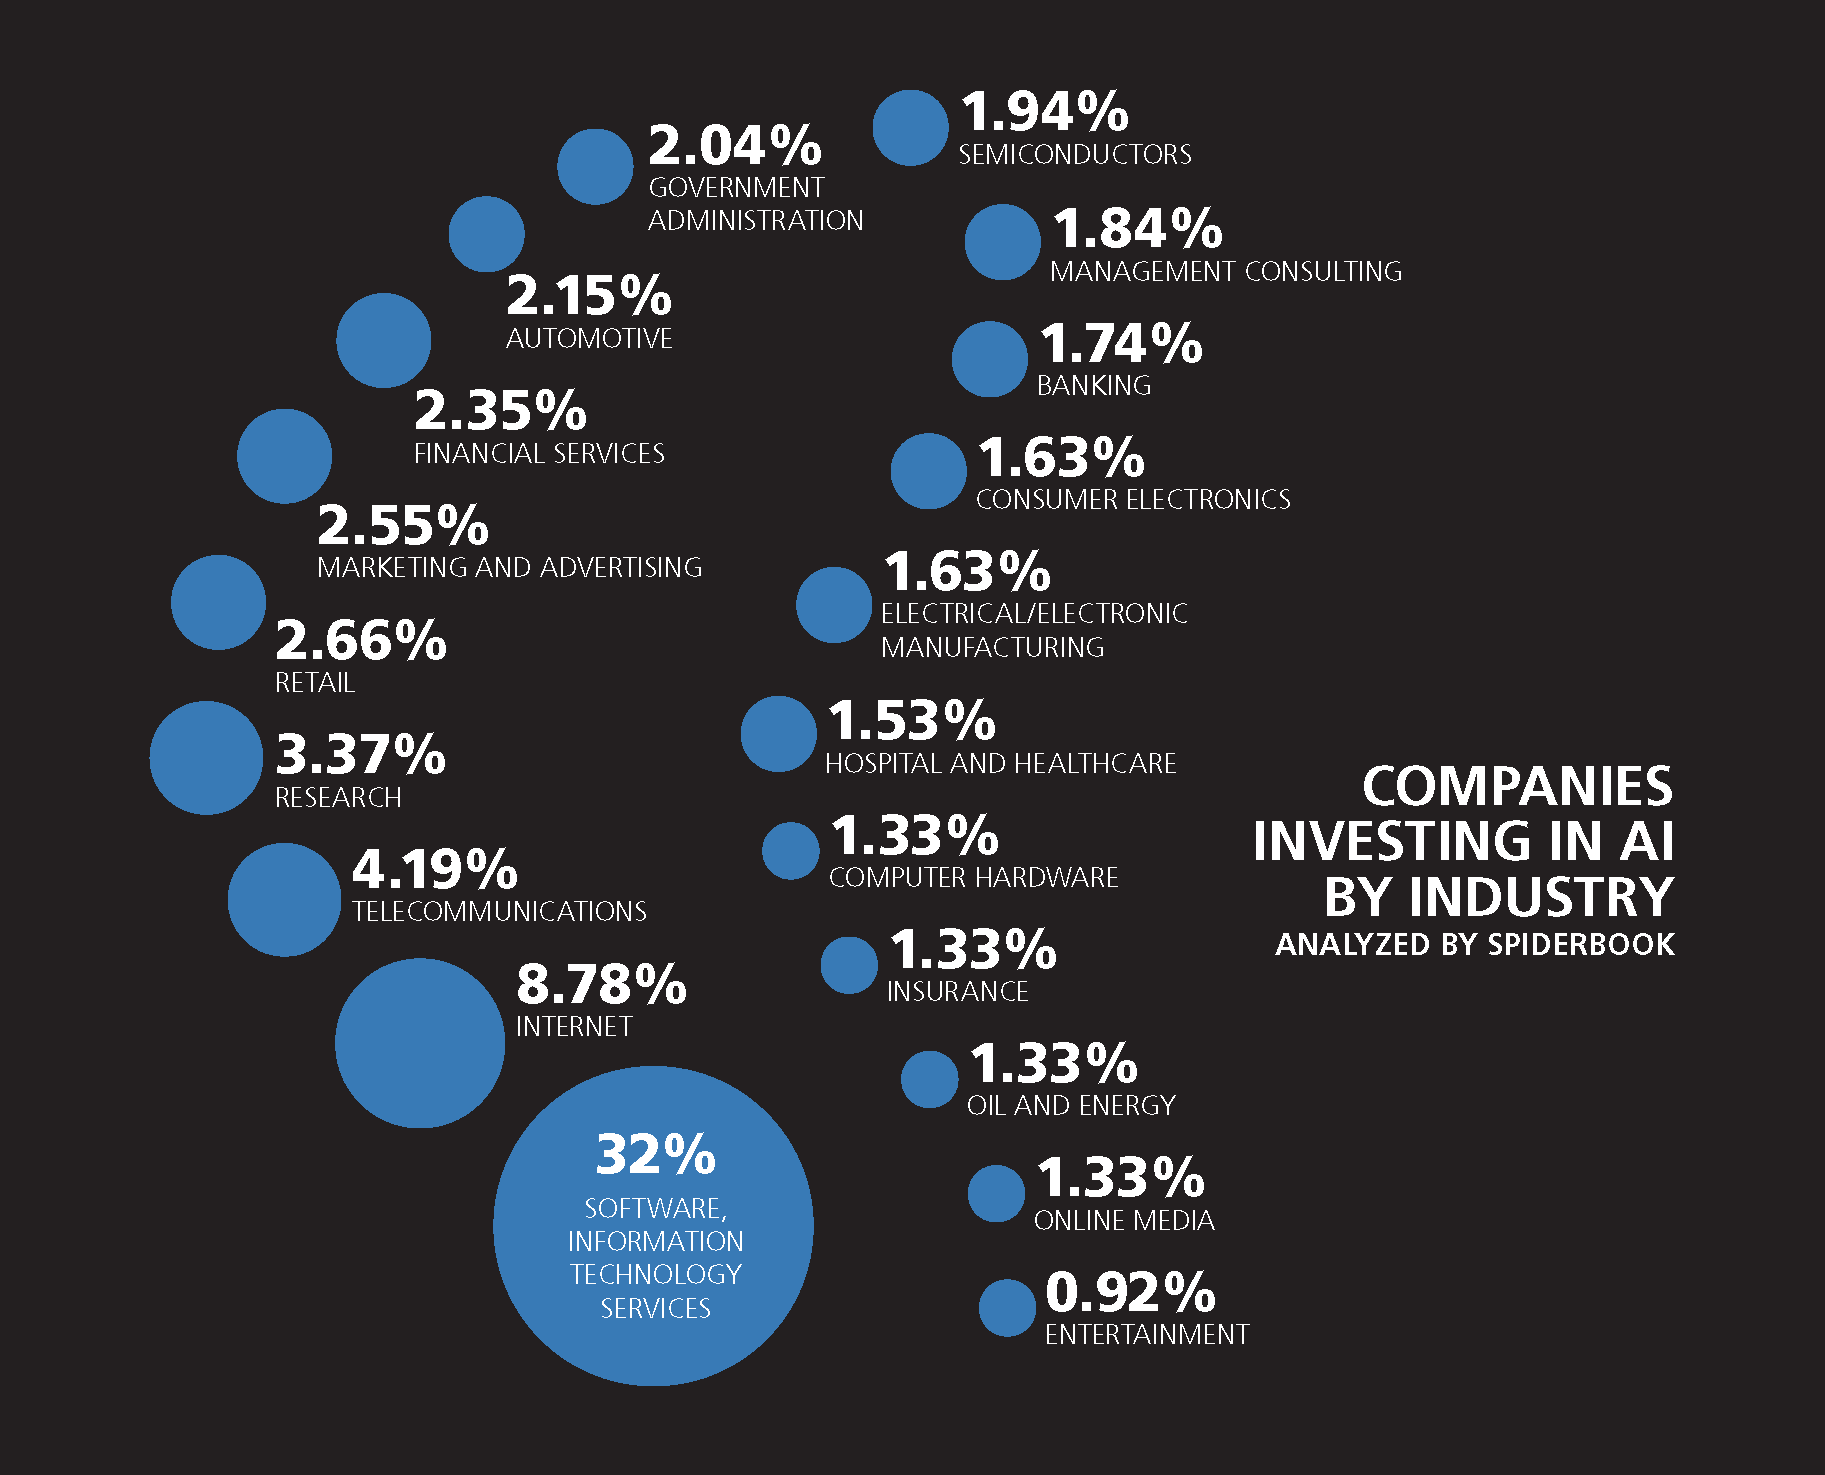 Breakdown of industries investing in AI